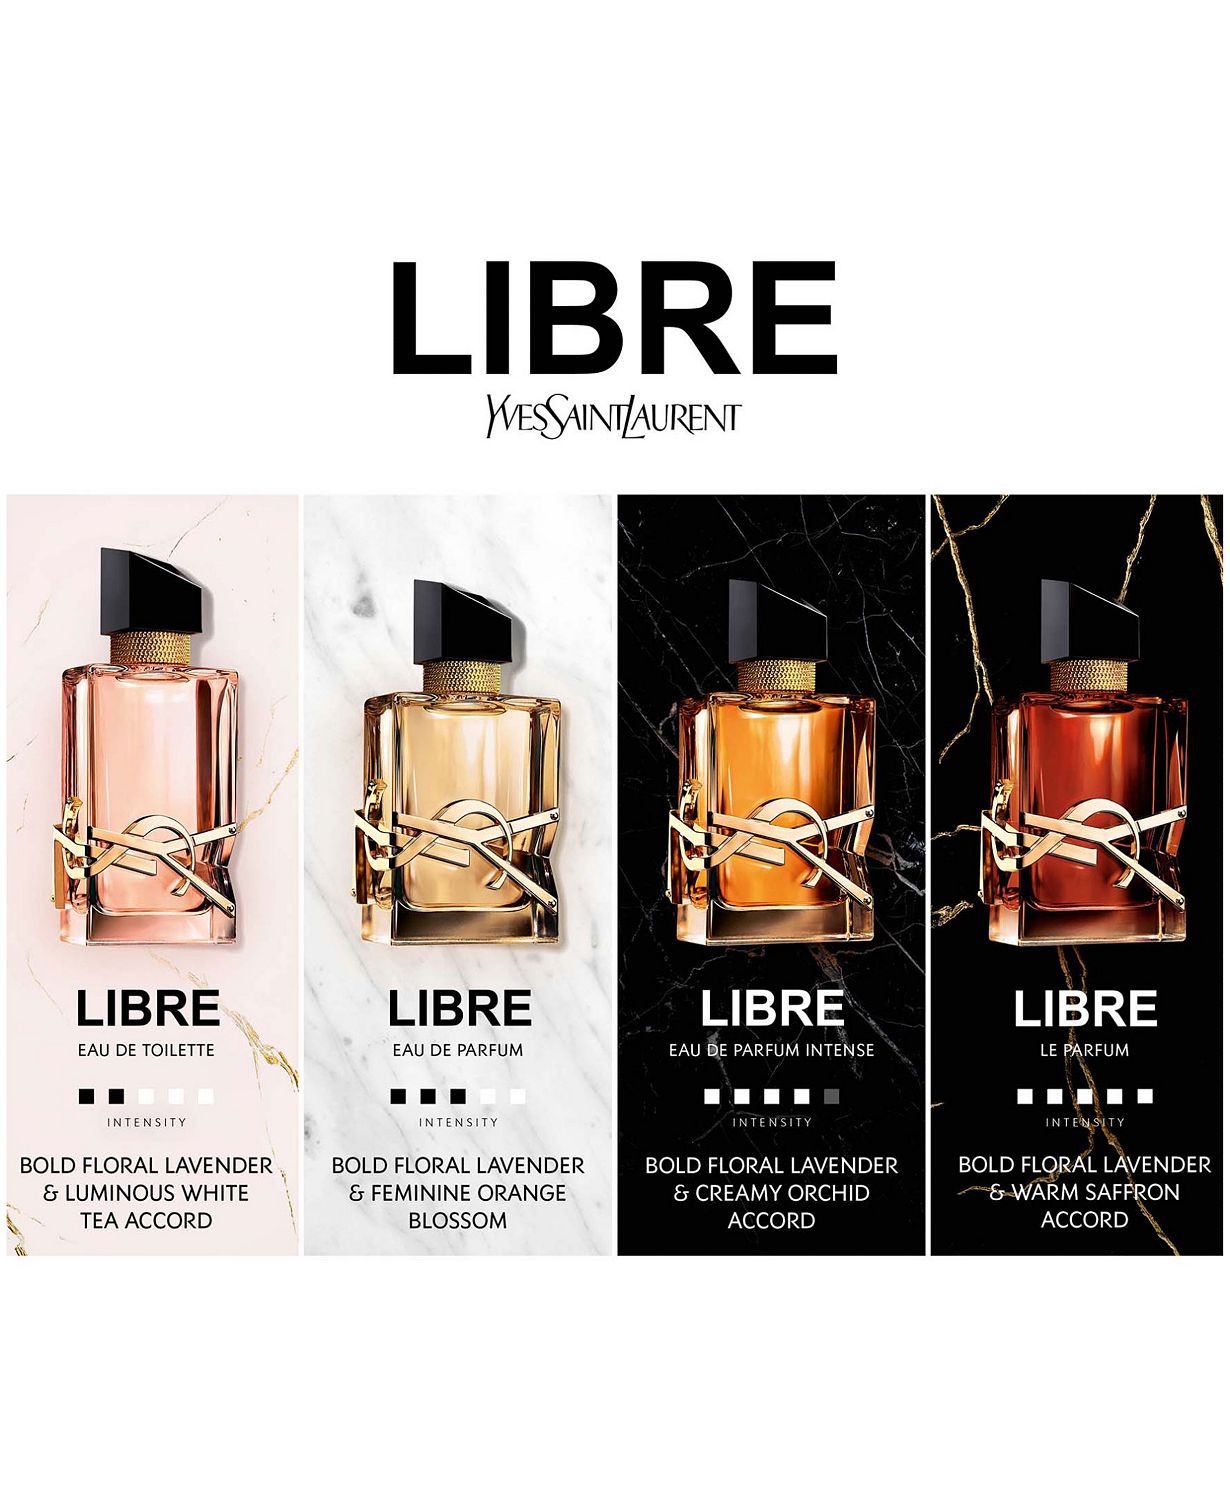 Libre Le Parfum Spray, 3 oz.